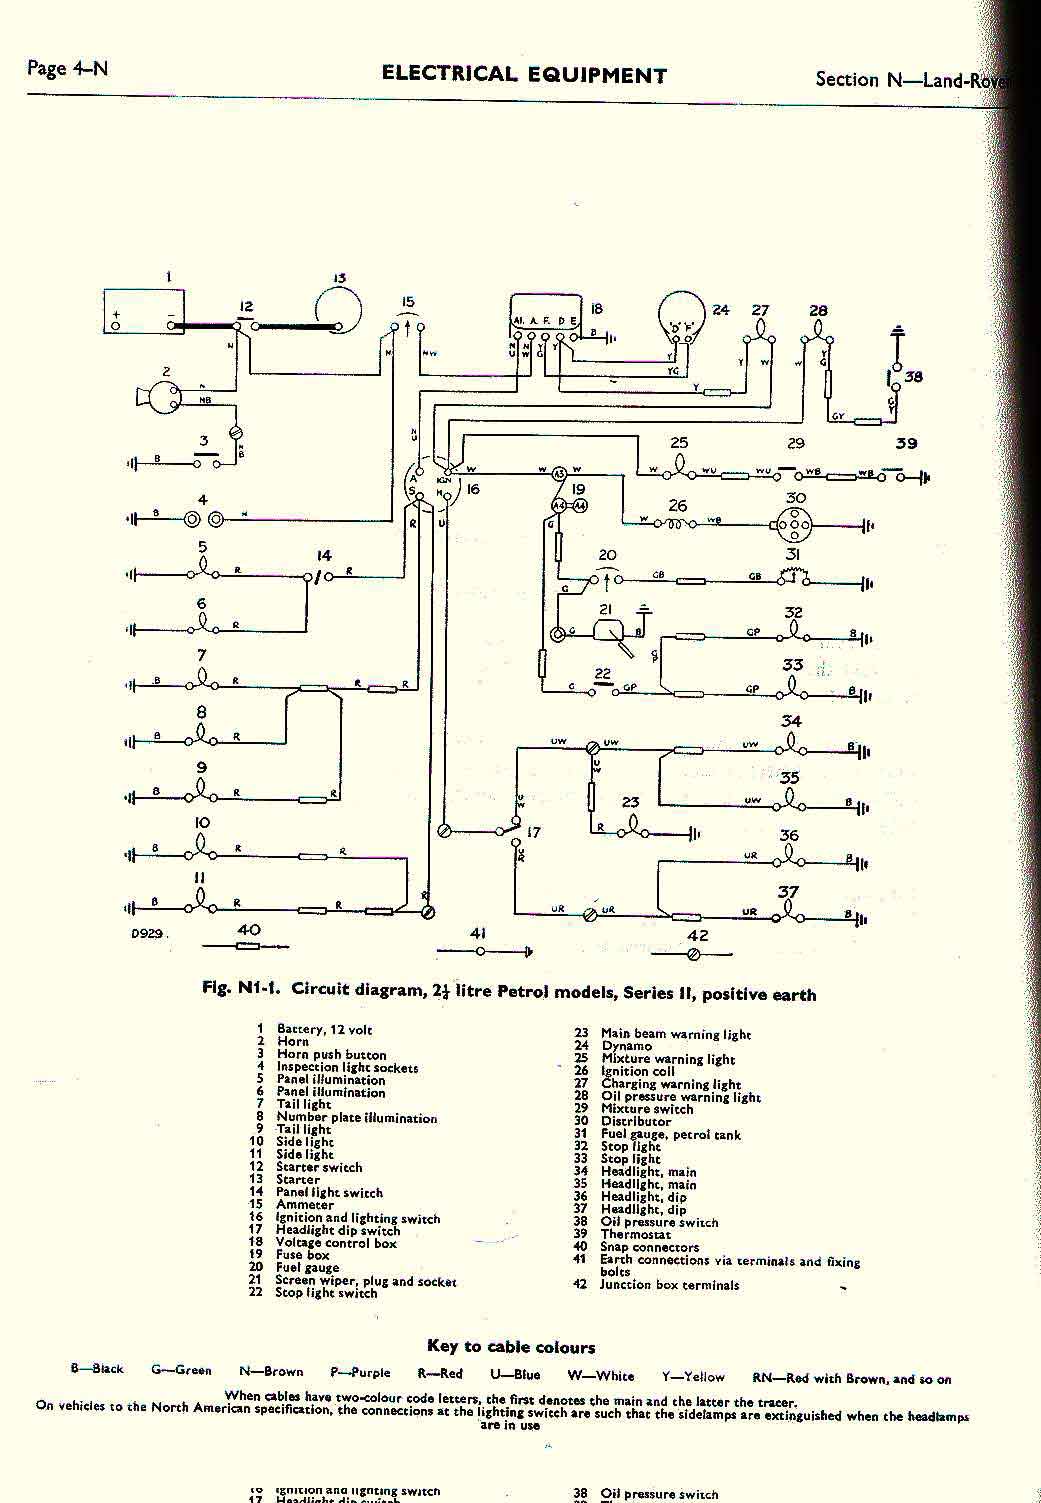 [DIAGRAM] 1985 Dodge Ram 35Headlight Wiring Diagram 1985 Dodge Ram Tail Light Wiring Diagram